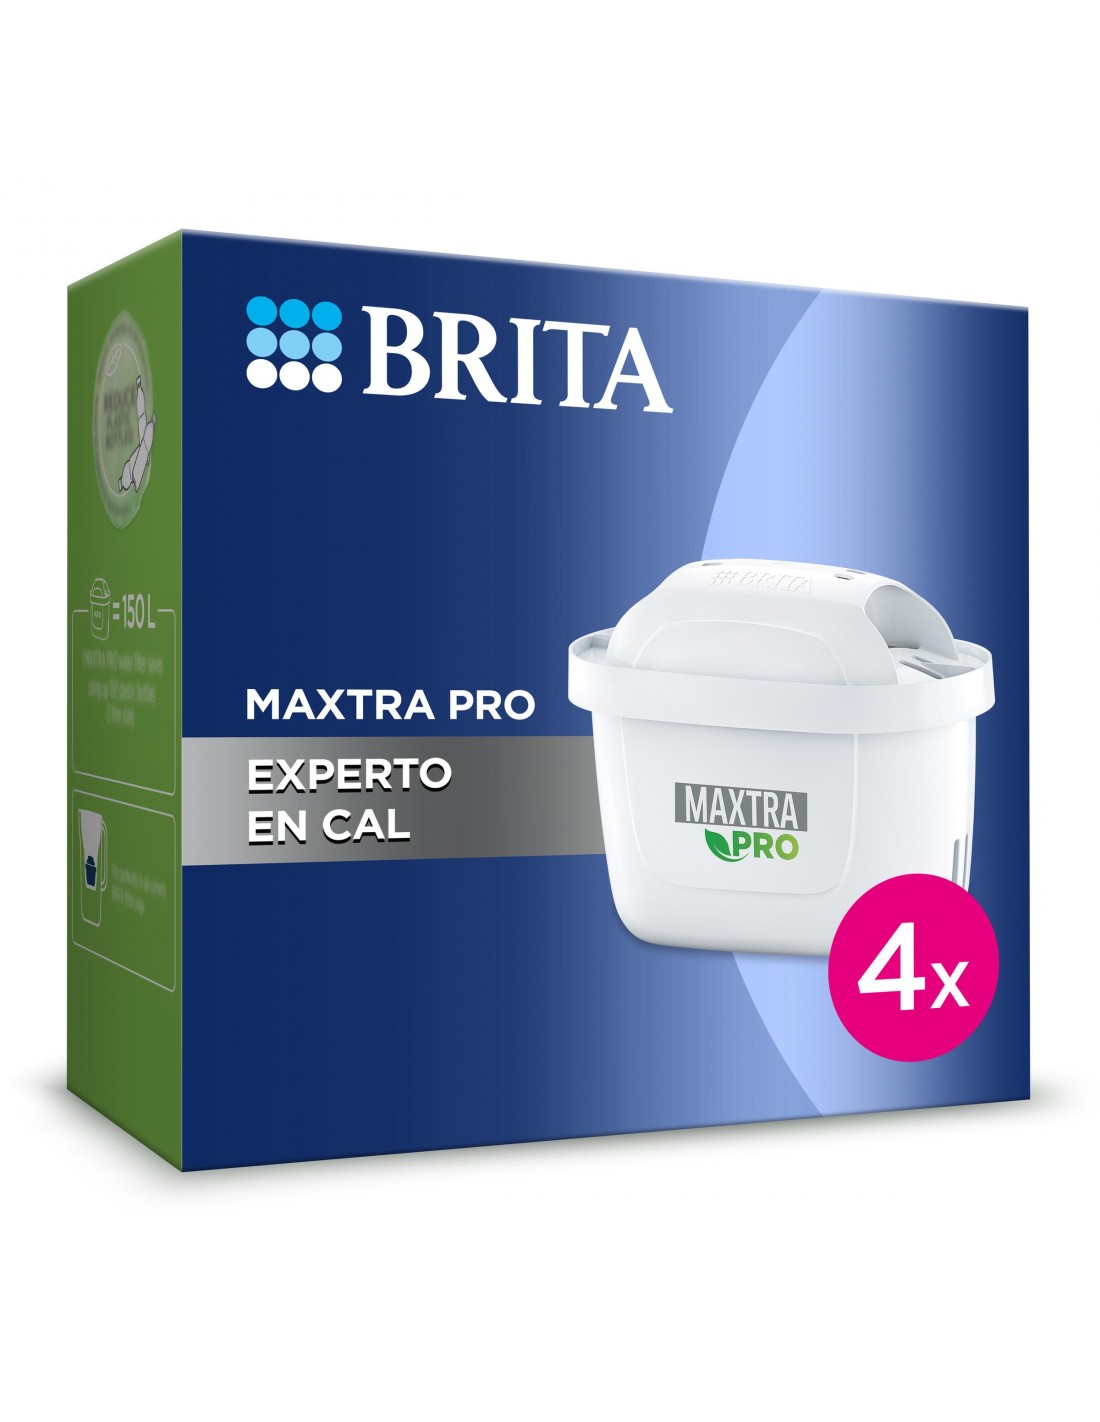 Cartucho Jarra Brita Maxtra Pro 4 Uds Experto En Cal 1050823 Filtra 50  Litros Mas Que Maxtra Plus